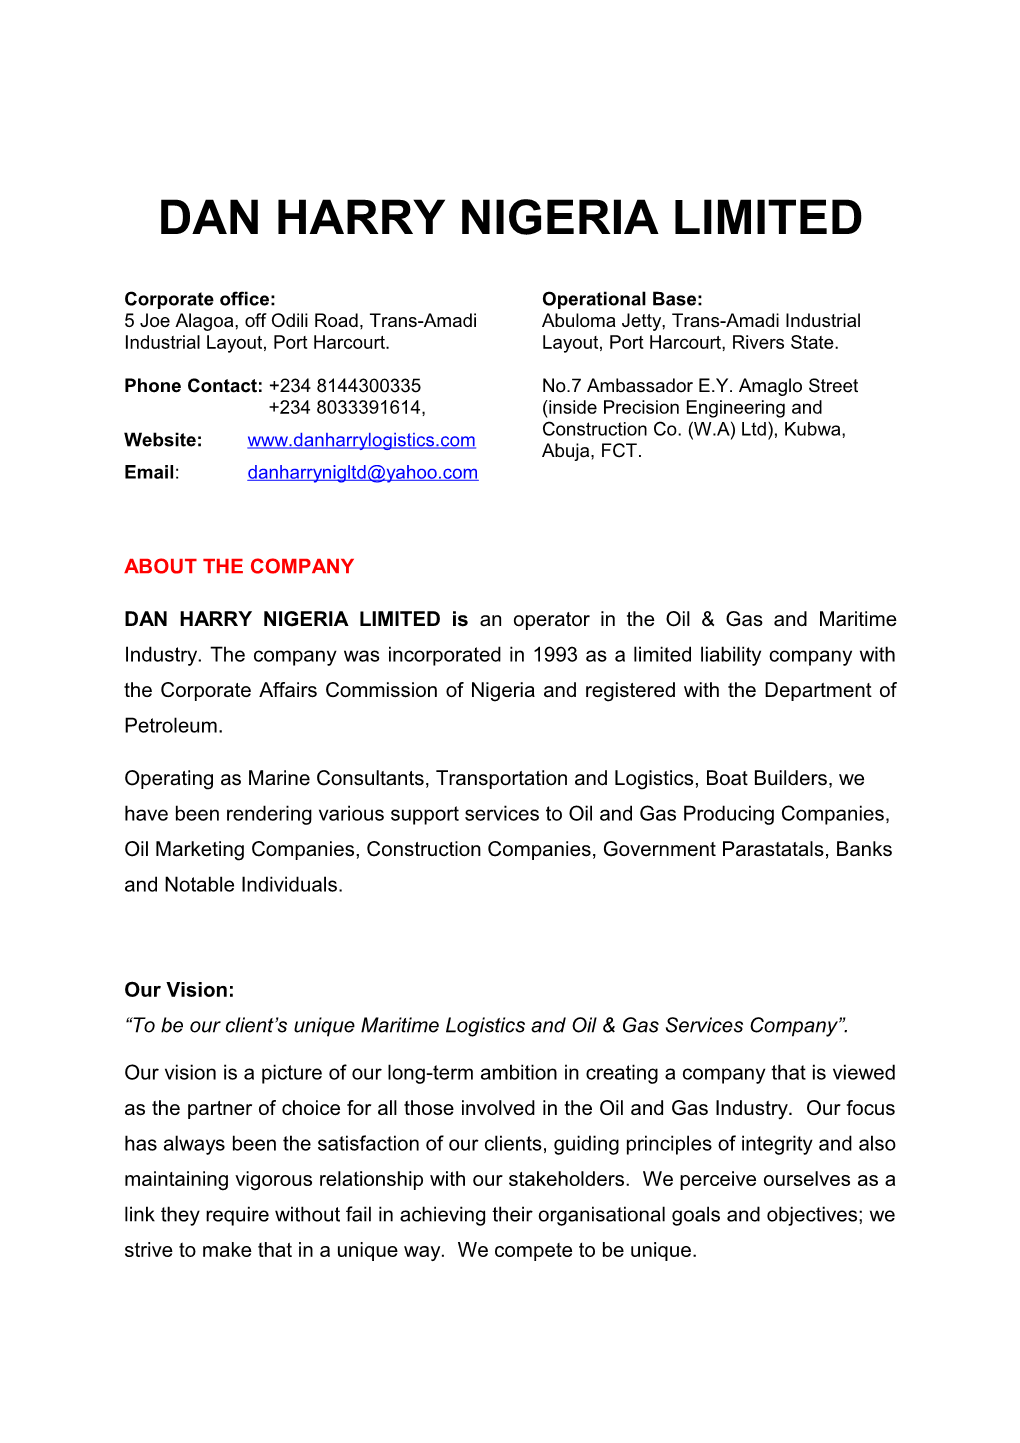 Dan Harry Nigeria Limited